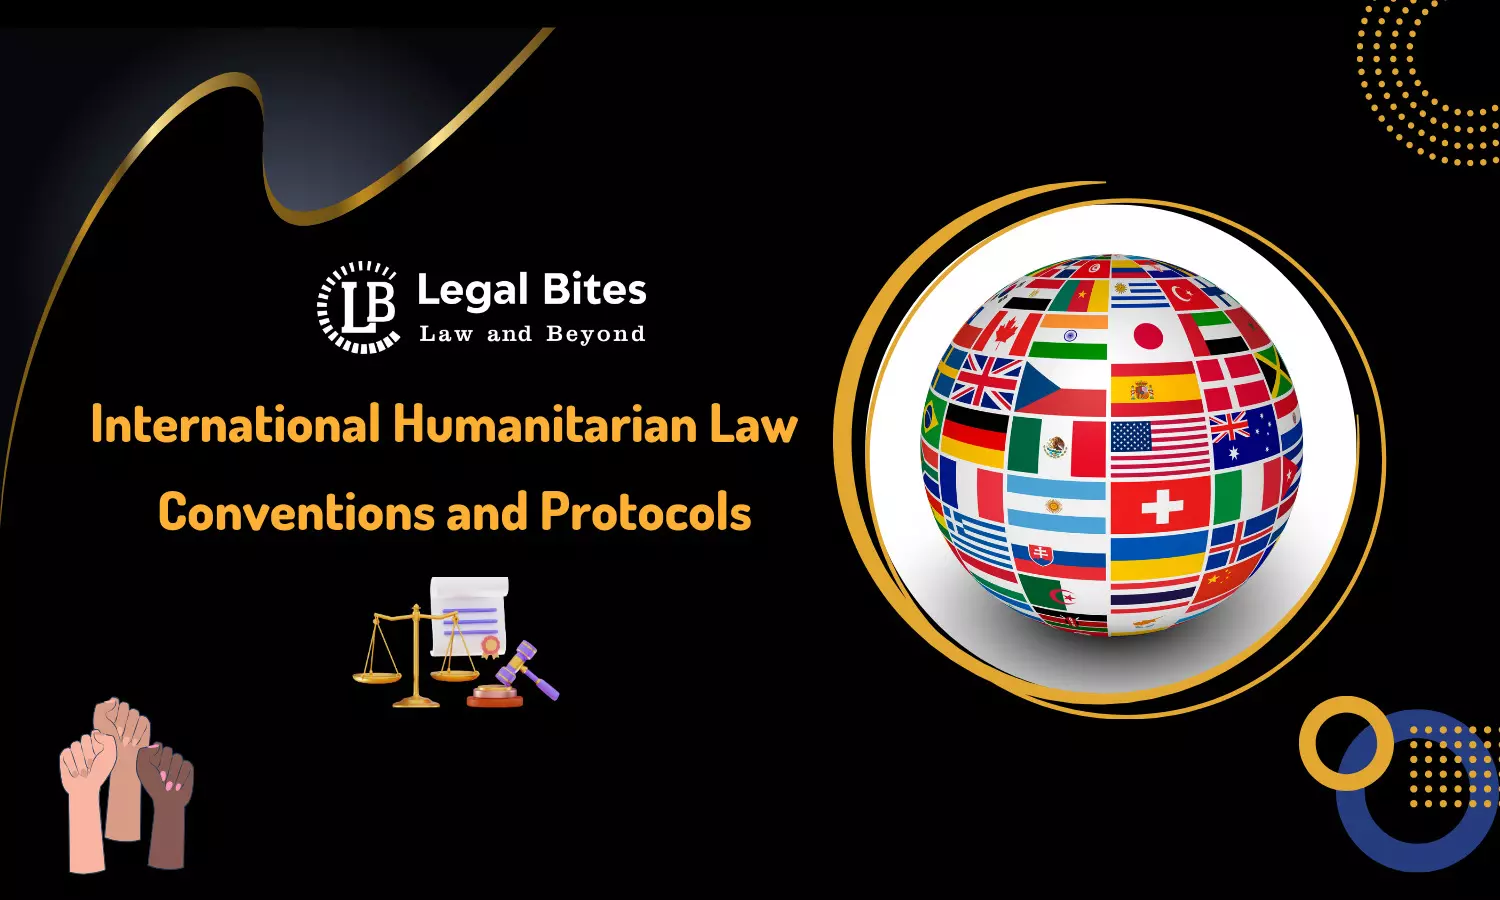 International Humanitarian Law (IHL) - Conventions and Protocols